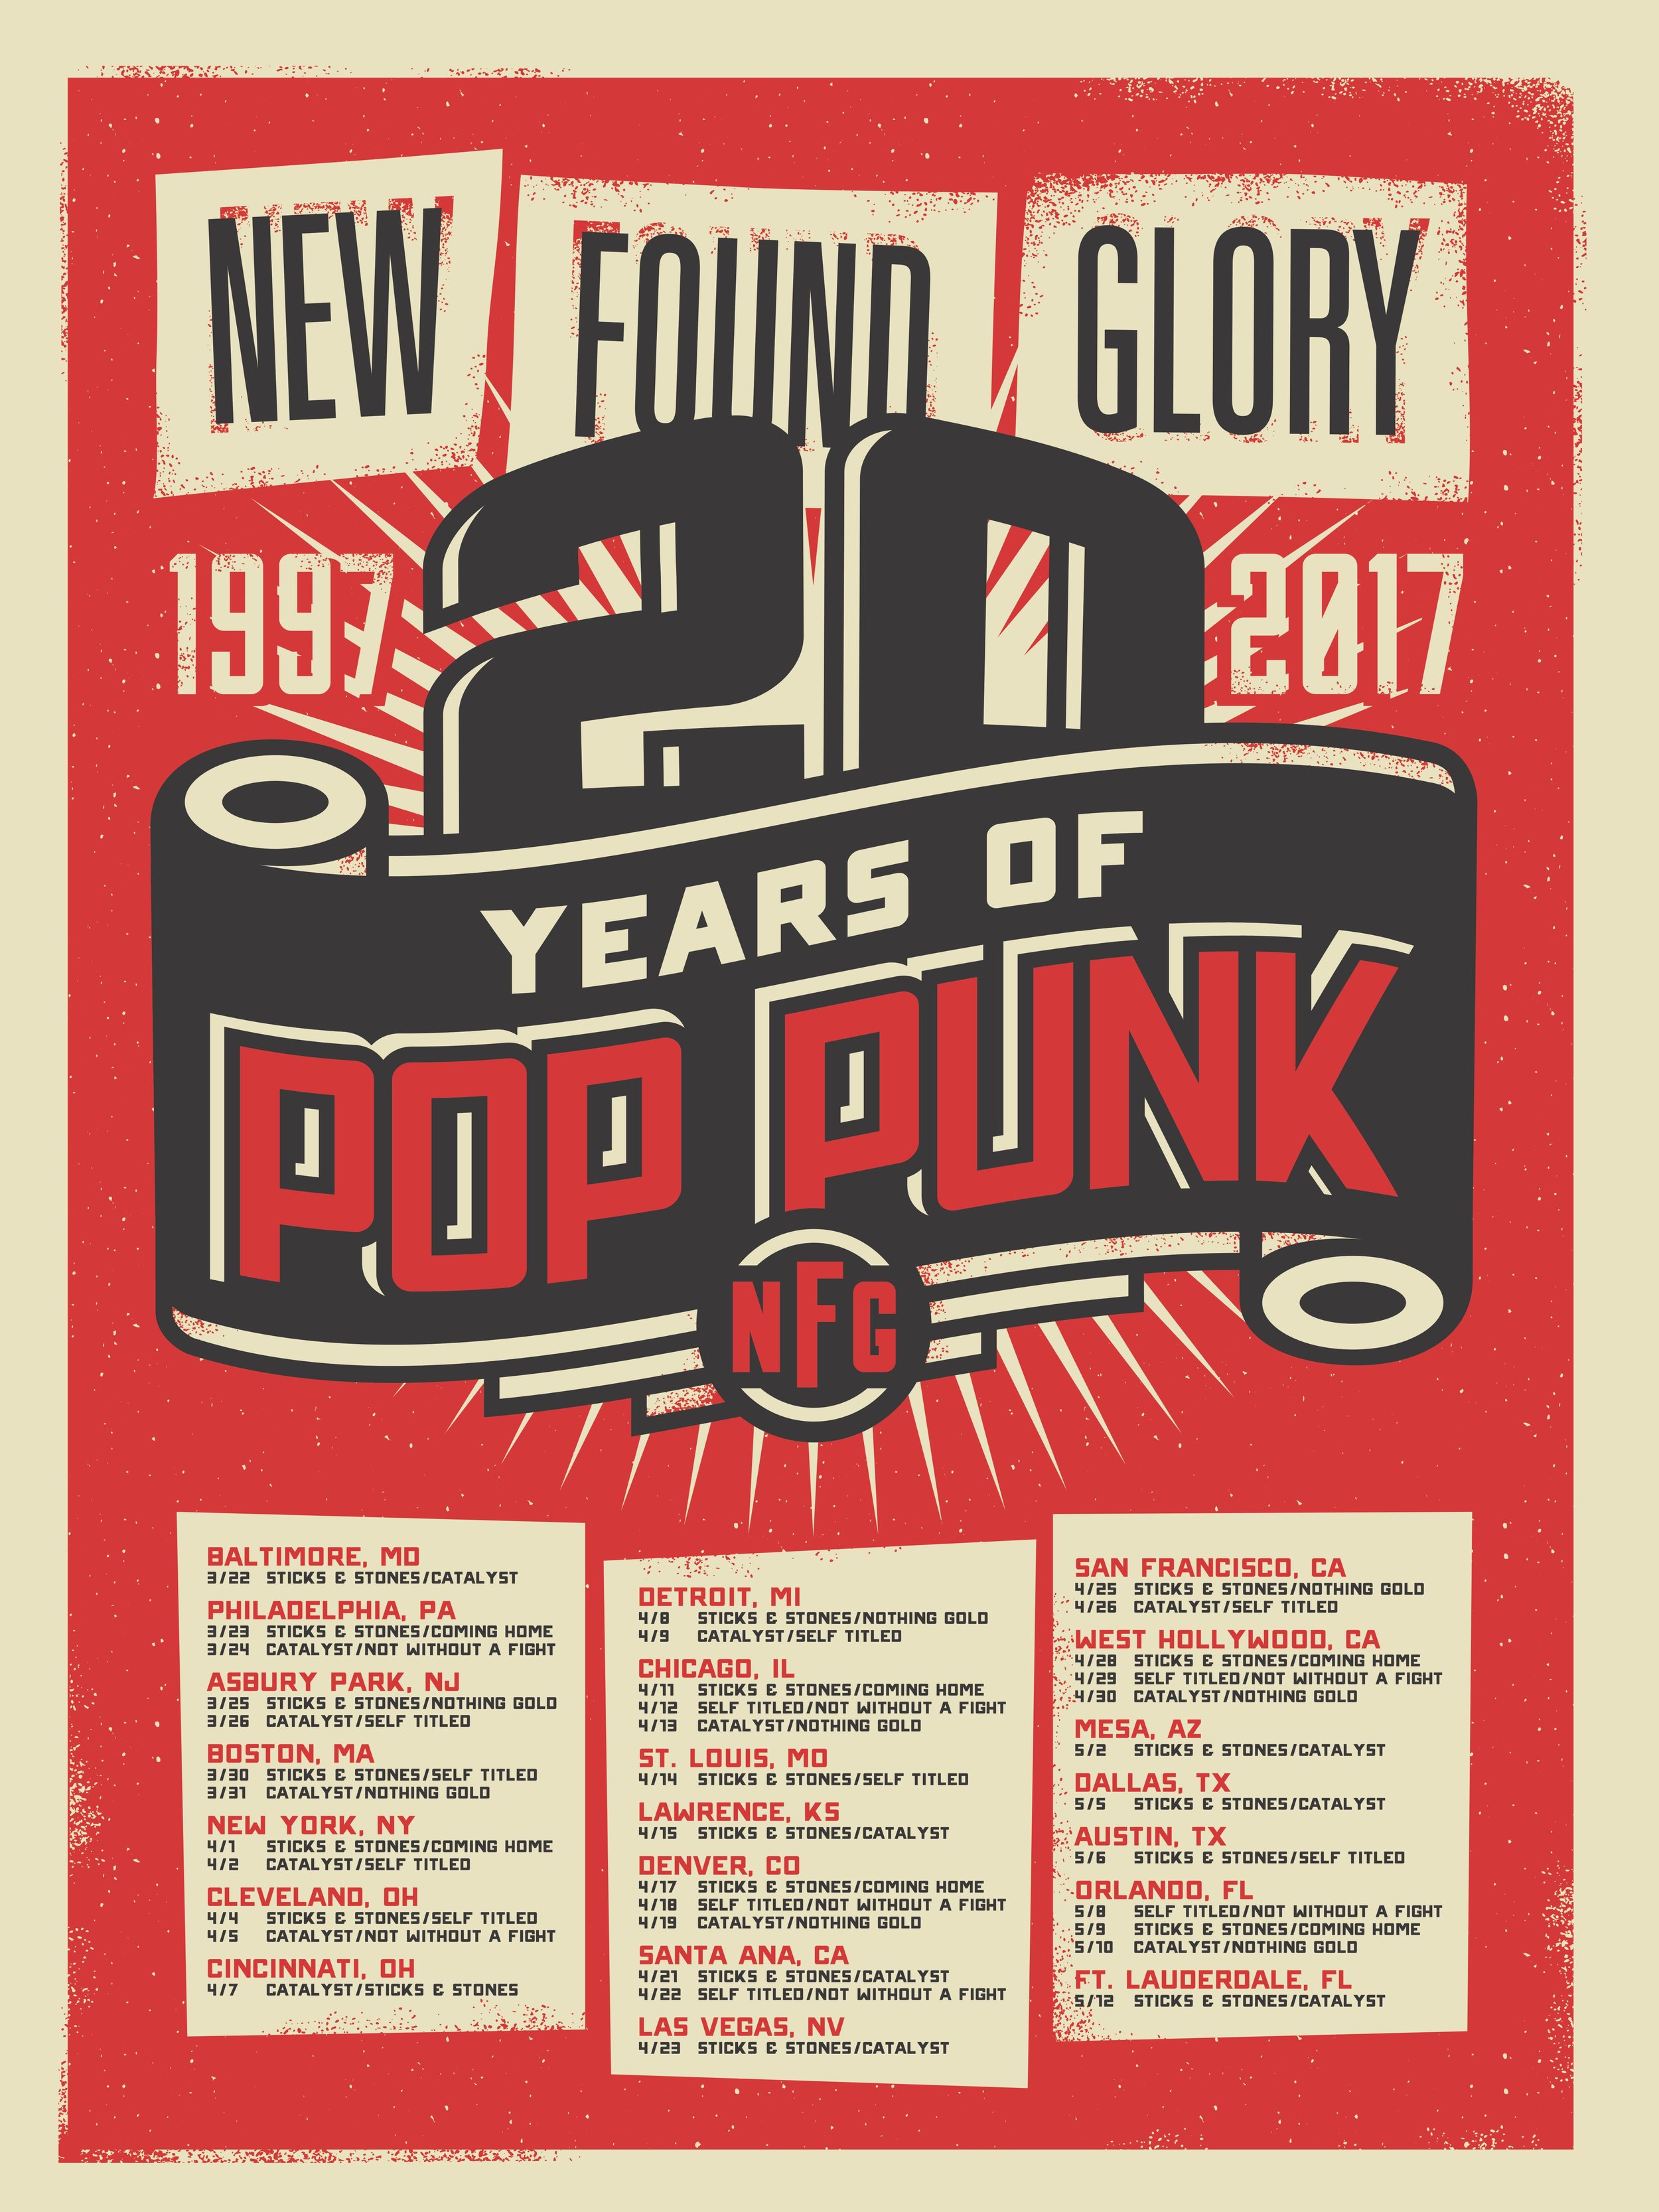 New Found Glory Nfg Year Tour